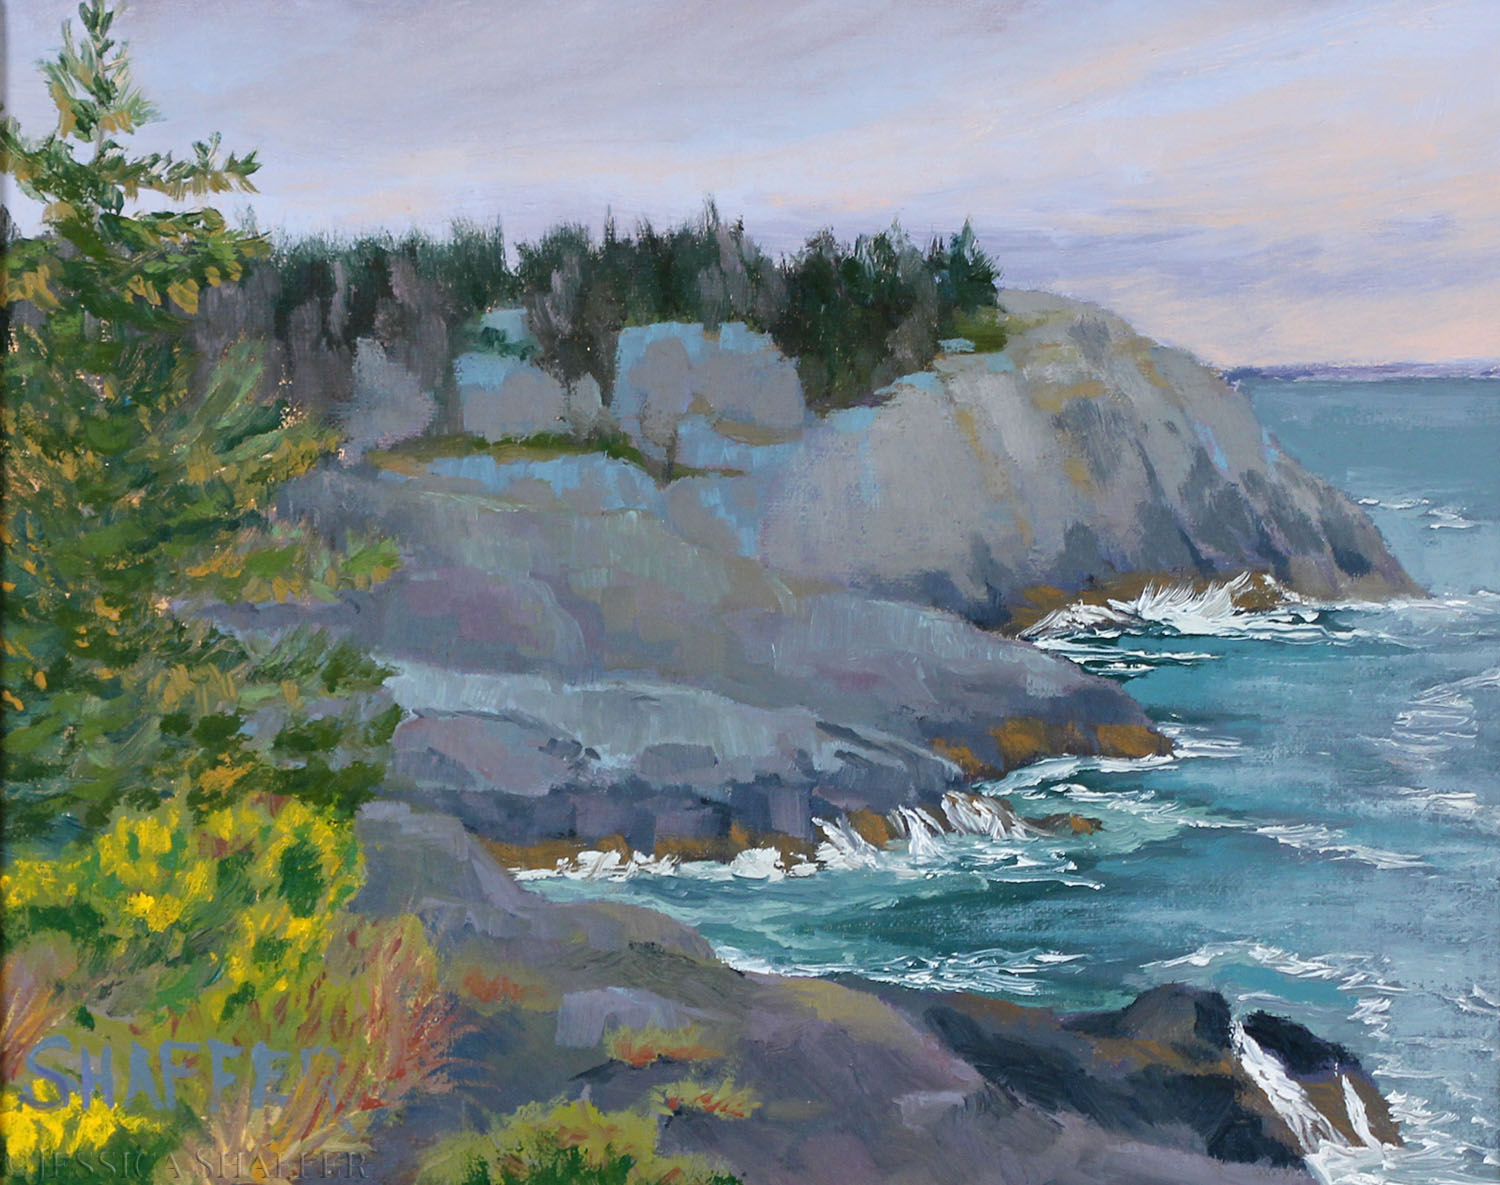 'Storm Over Squeaker Cove', 8 x 10 inches, plein air landscape oil painting of Monhegan Island, Maine. Original art for sale.